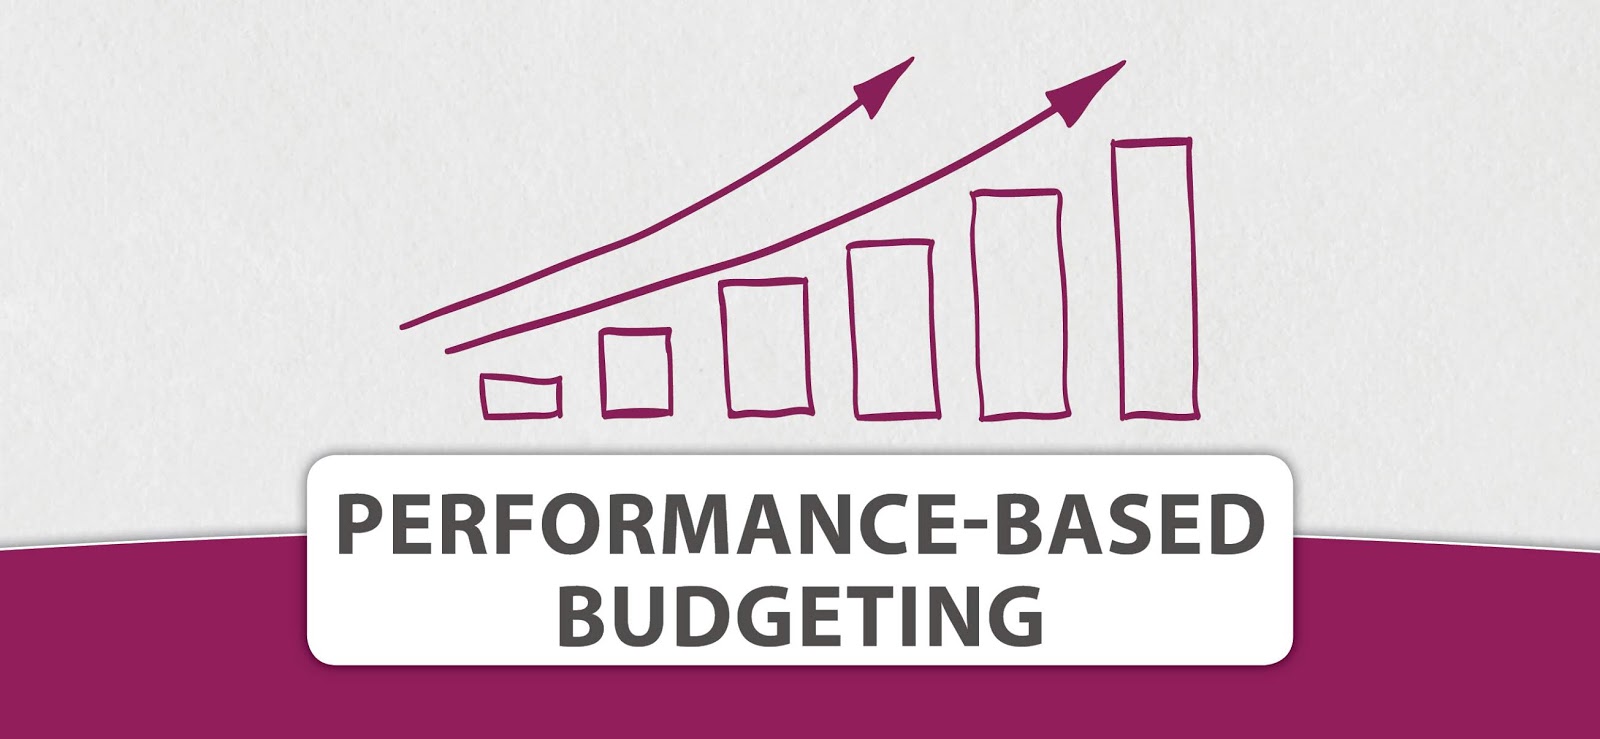 Performance based budgeting